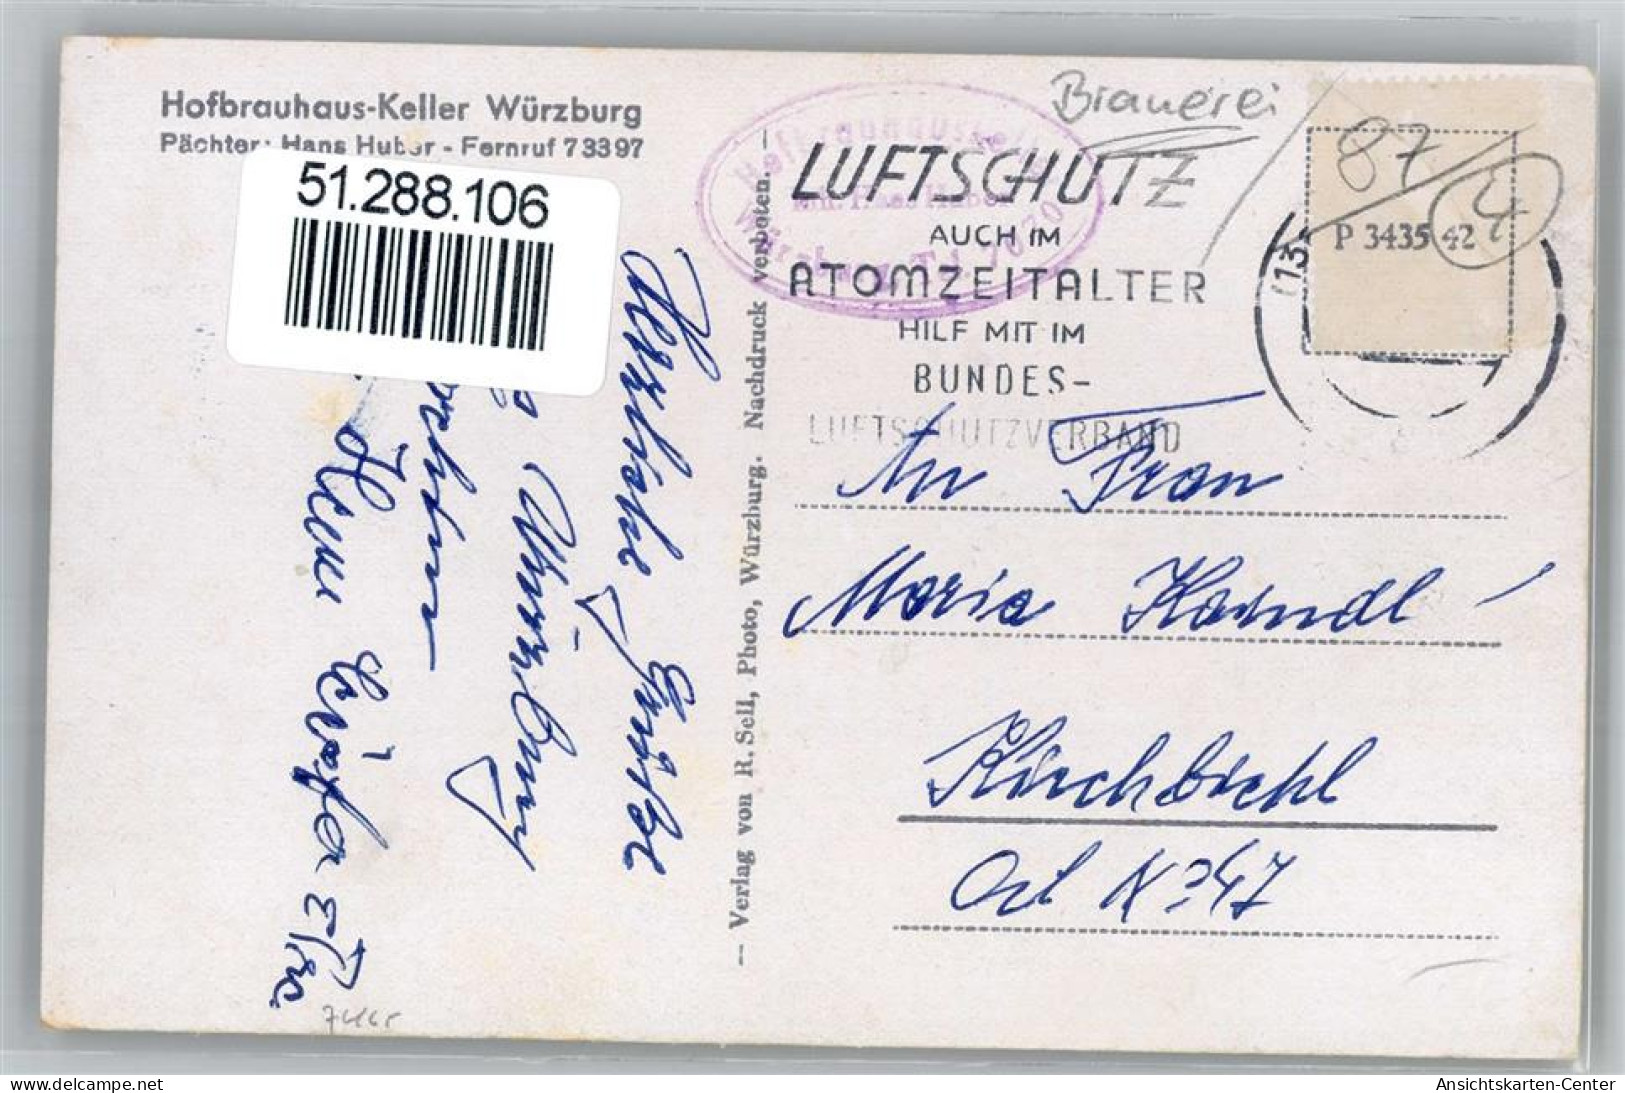 51288106 - Wuerzburg - Wuerzburg